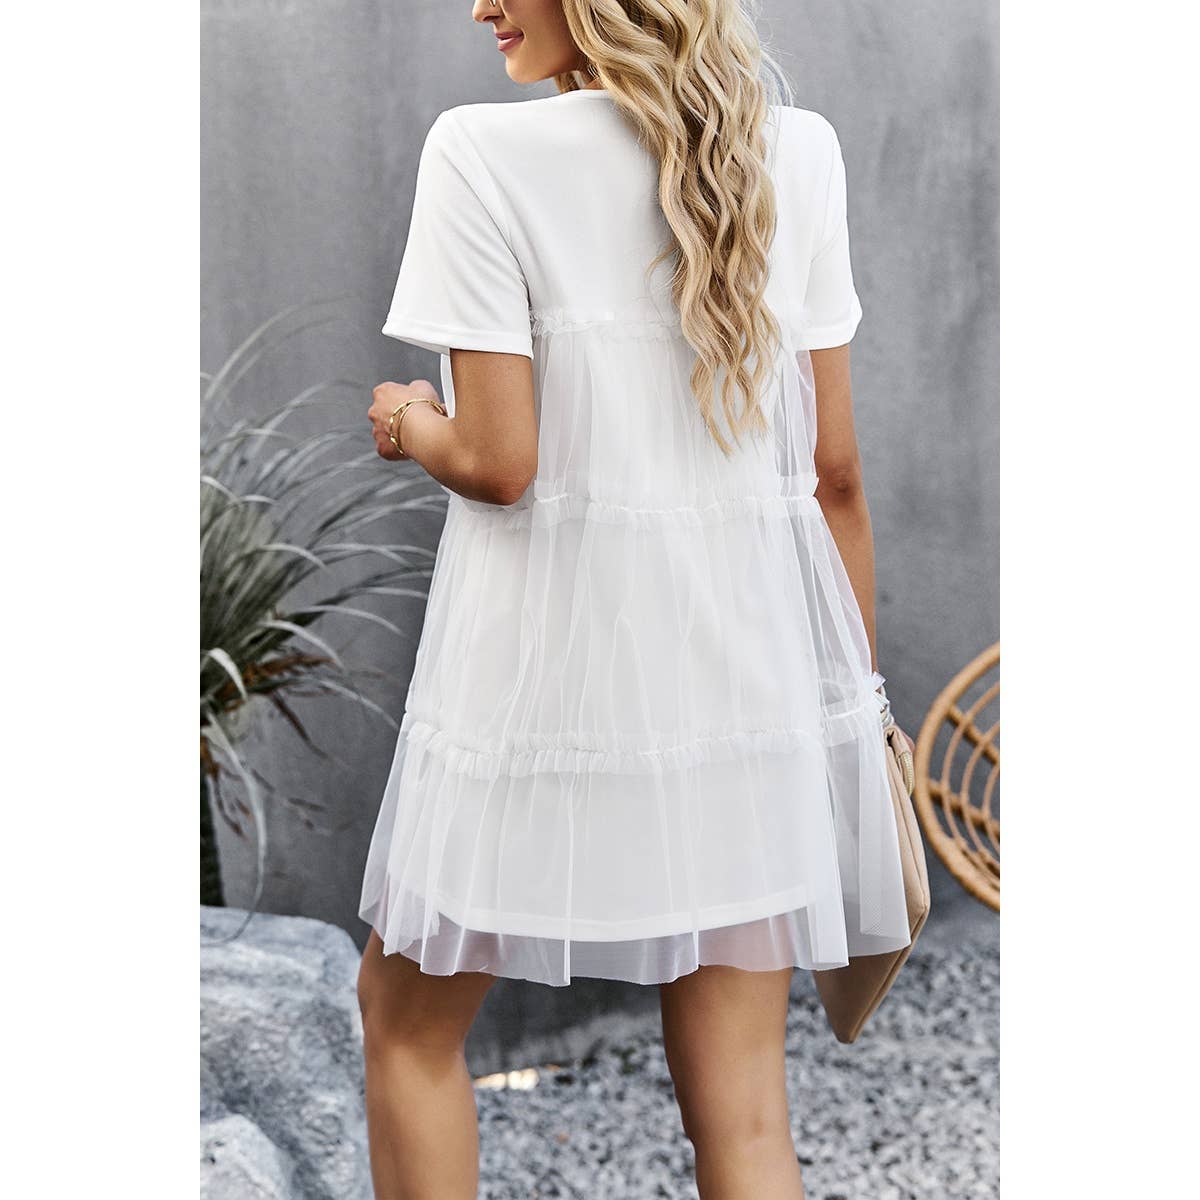 White Solid Lace Hem Ruffle Lined Dress